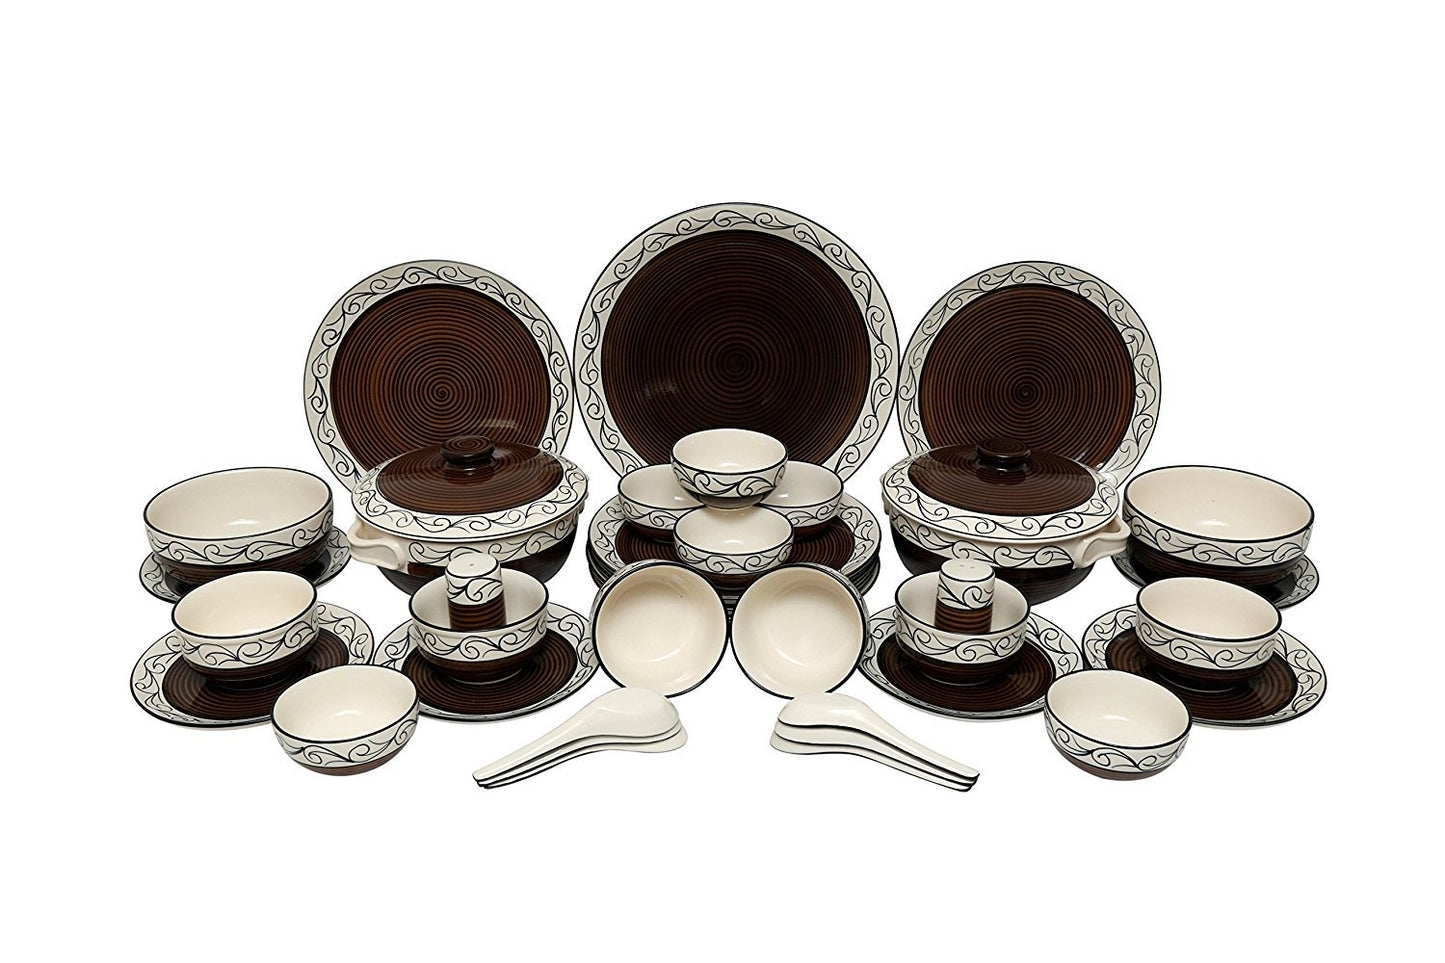 Caffeine Ceramic Handmade Brown Doodle Dinner Set (37 pcs Microwave Safe & Dishwasher Safe) - Caffeine Premium Stoneware